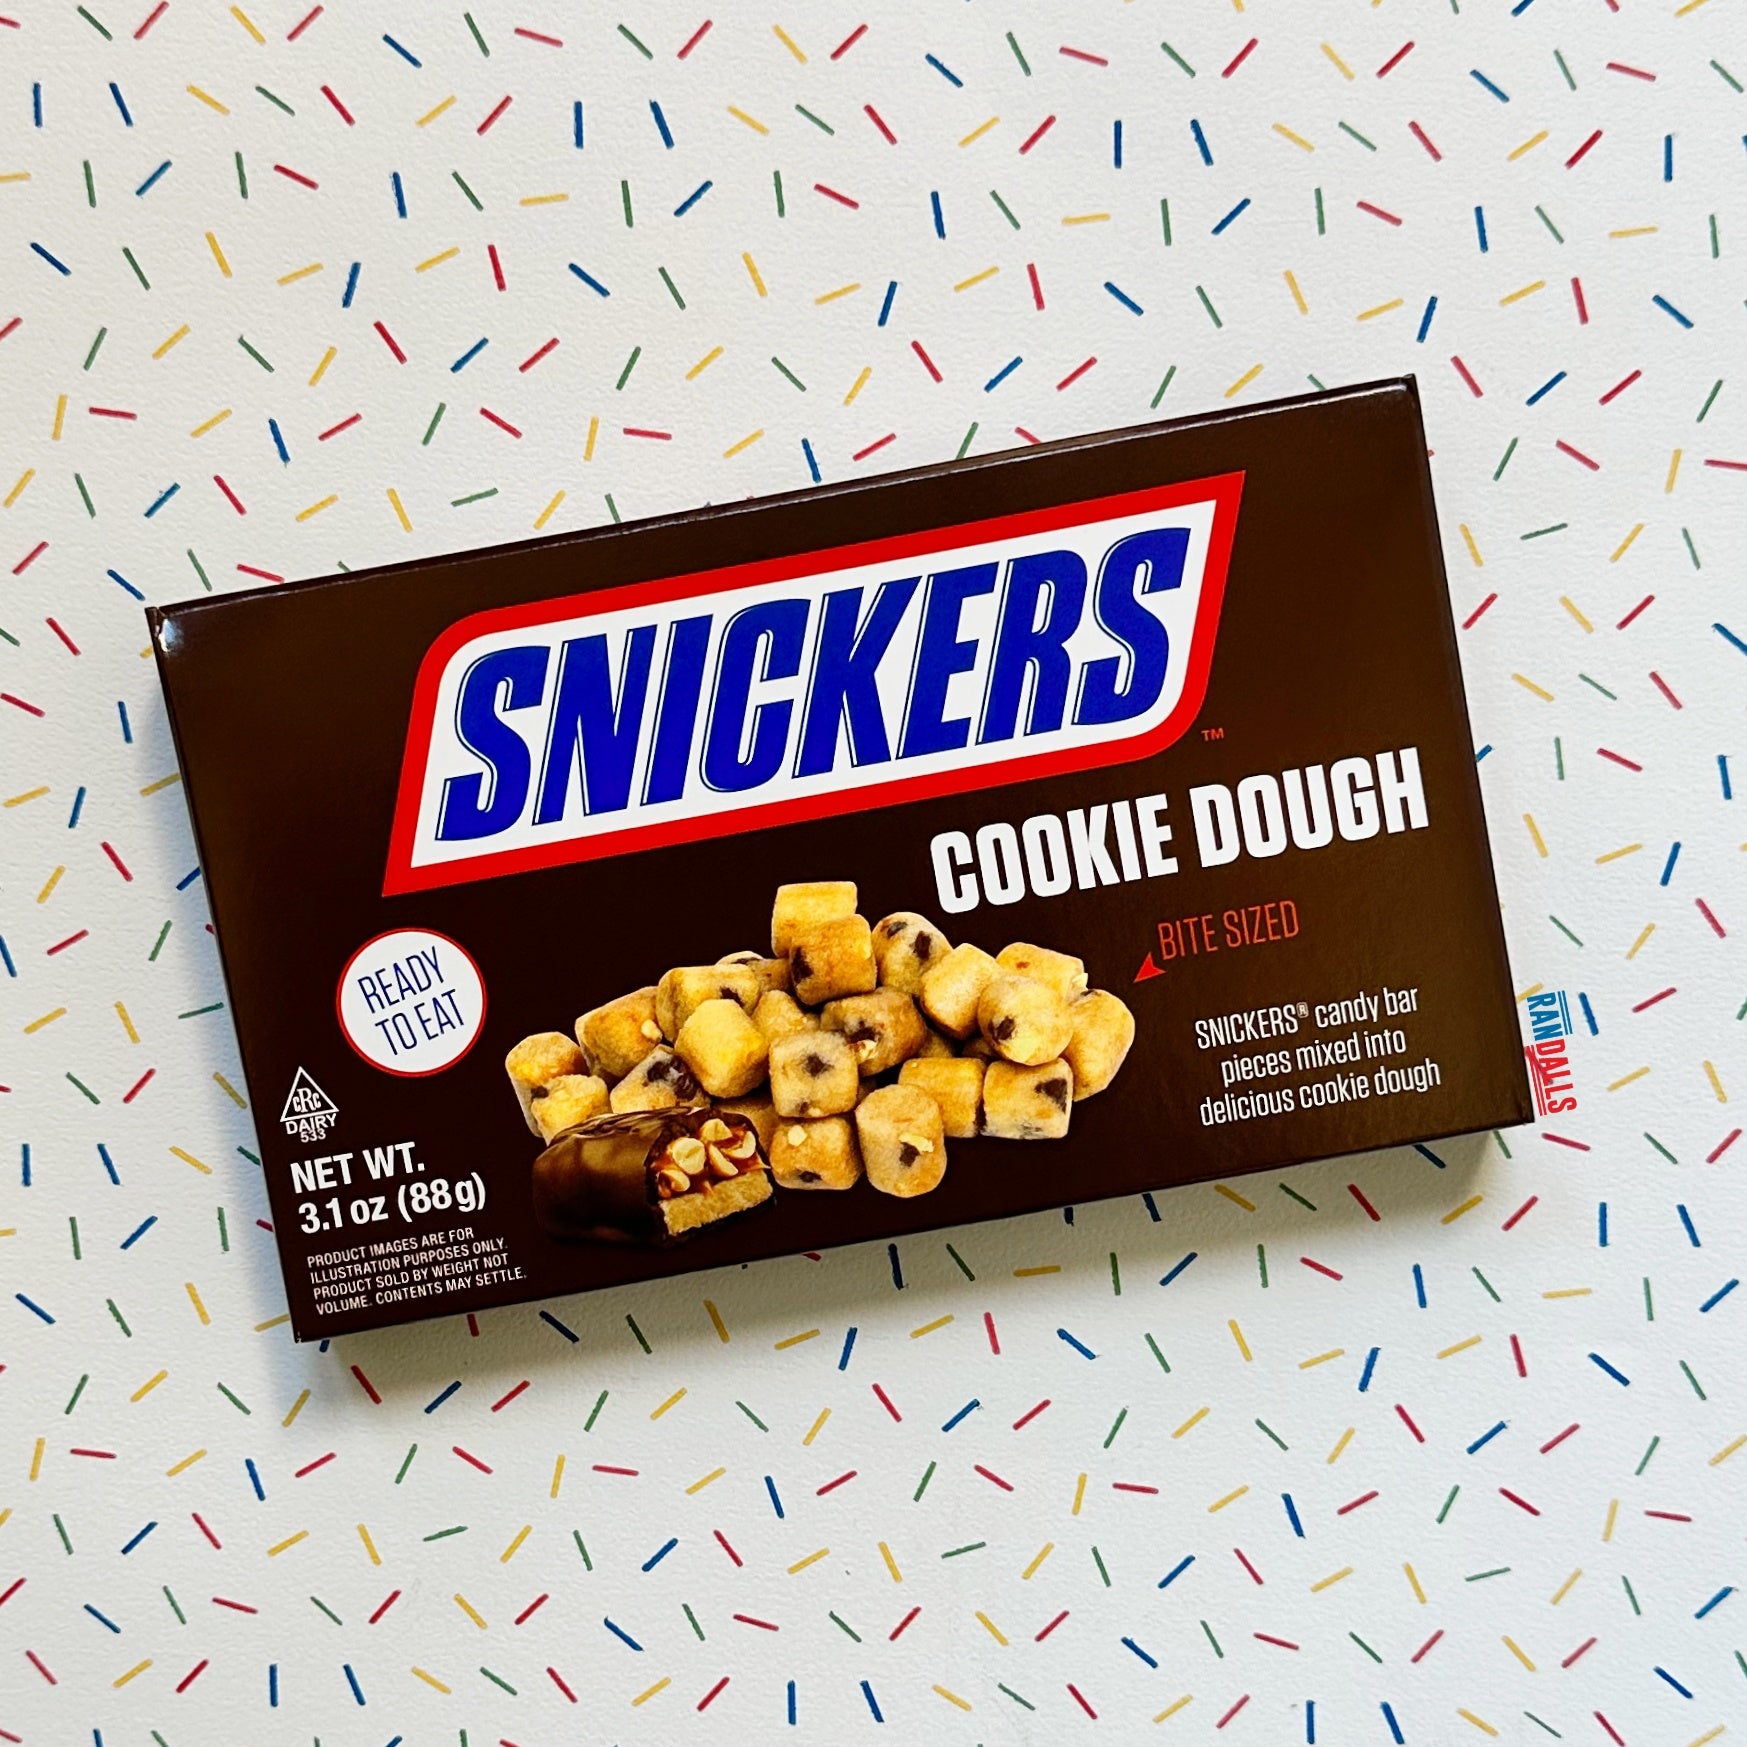 snickers, snickers cookie dough, snickers cookie, cookie dough, edible cookie dough, america, randalls, randallsuk